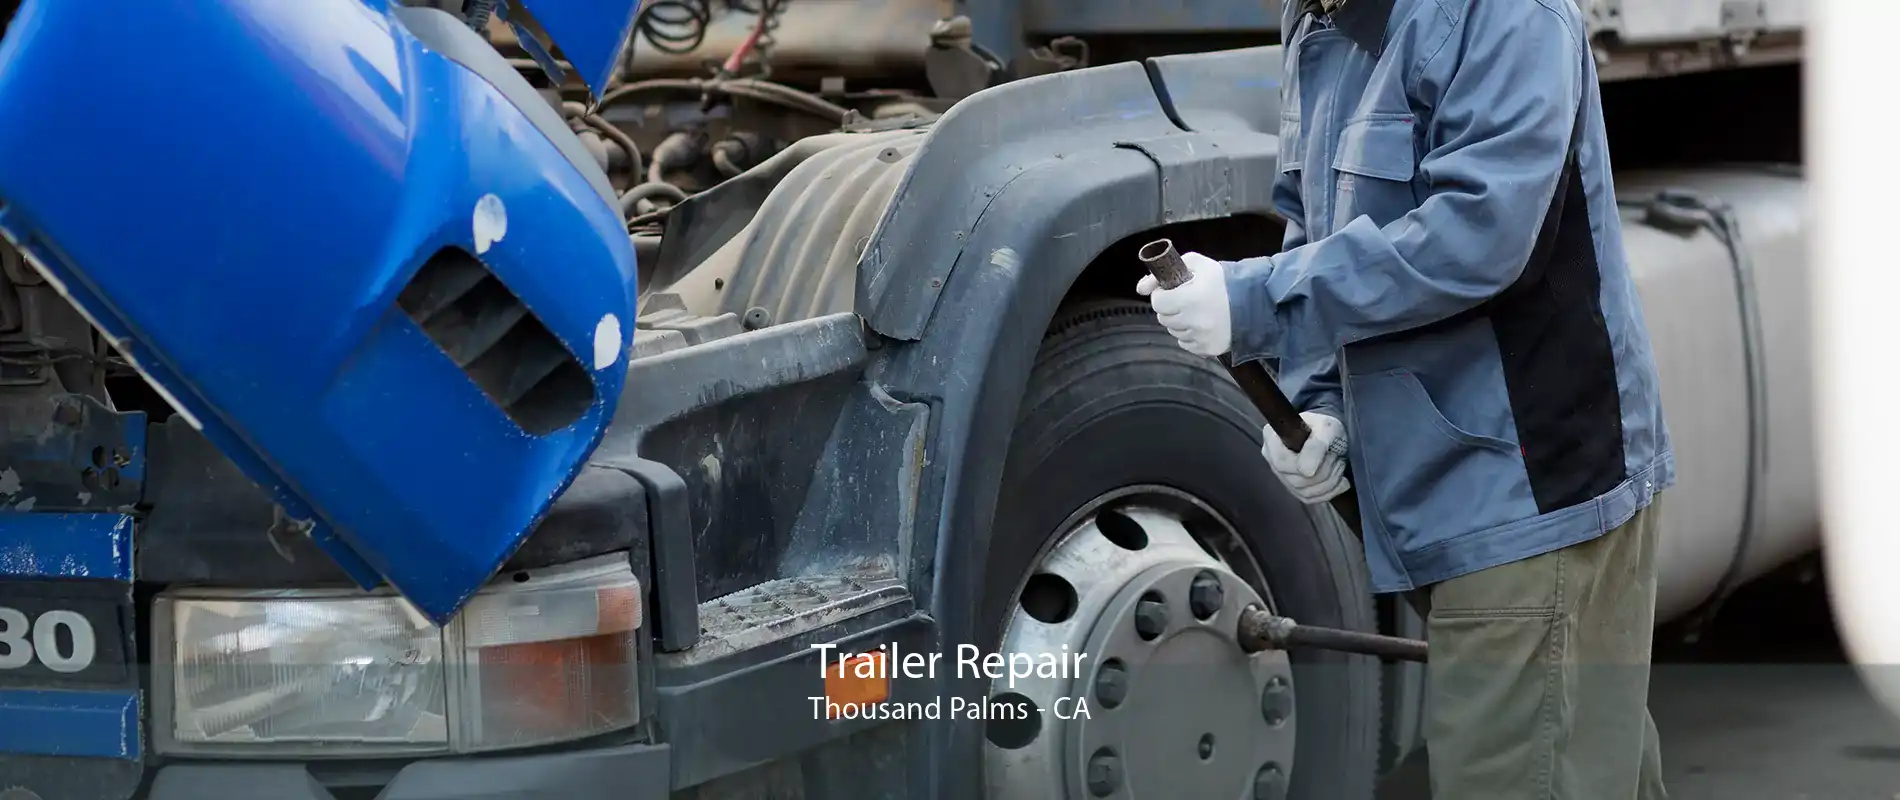 Trailer Repair Thousand Palms - CA